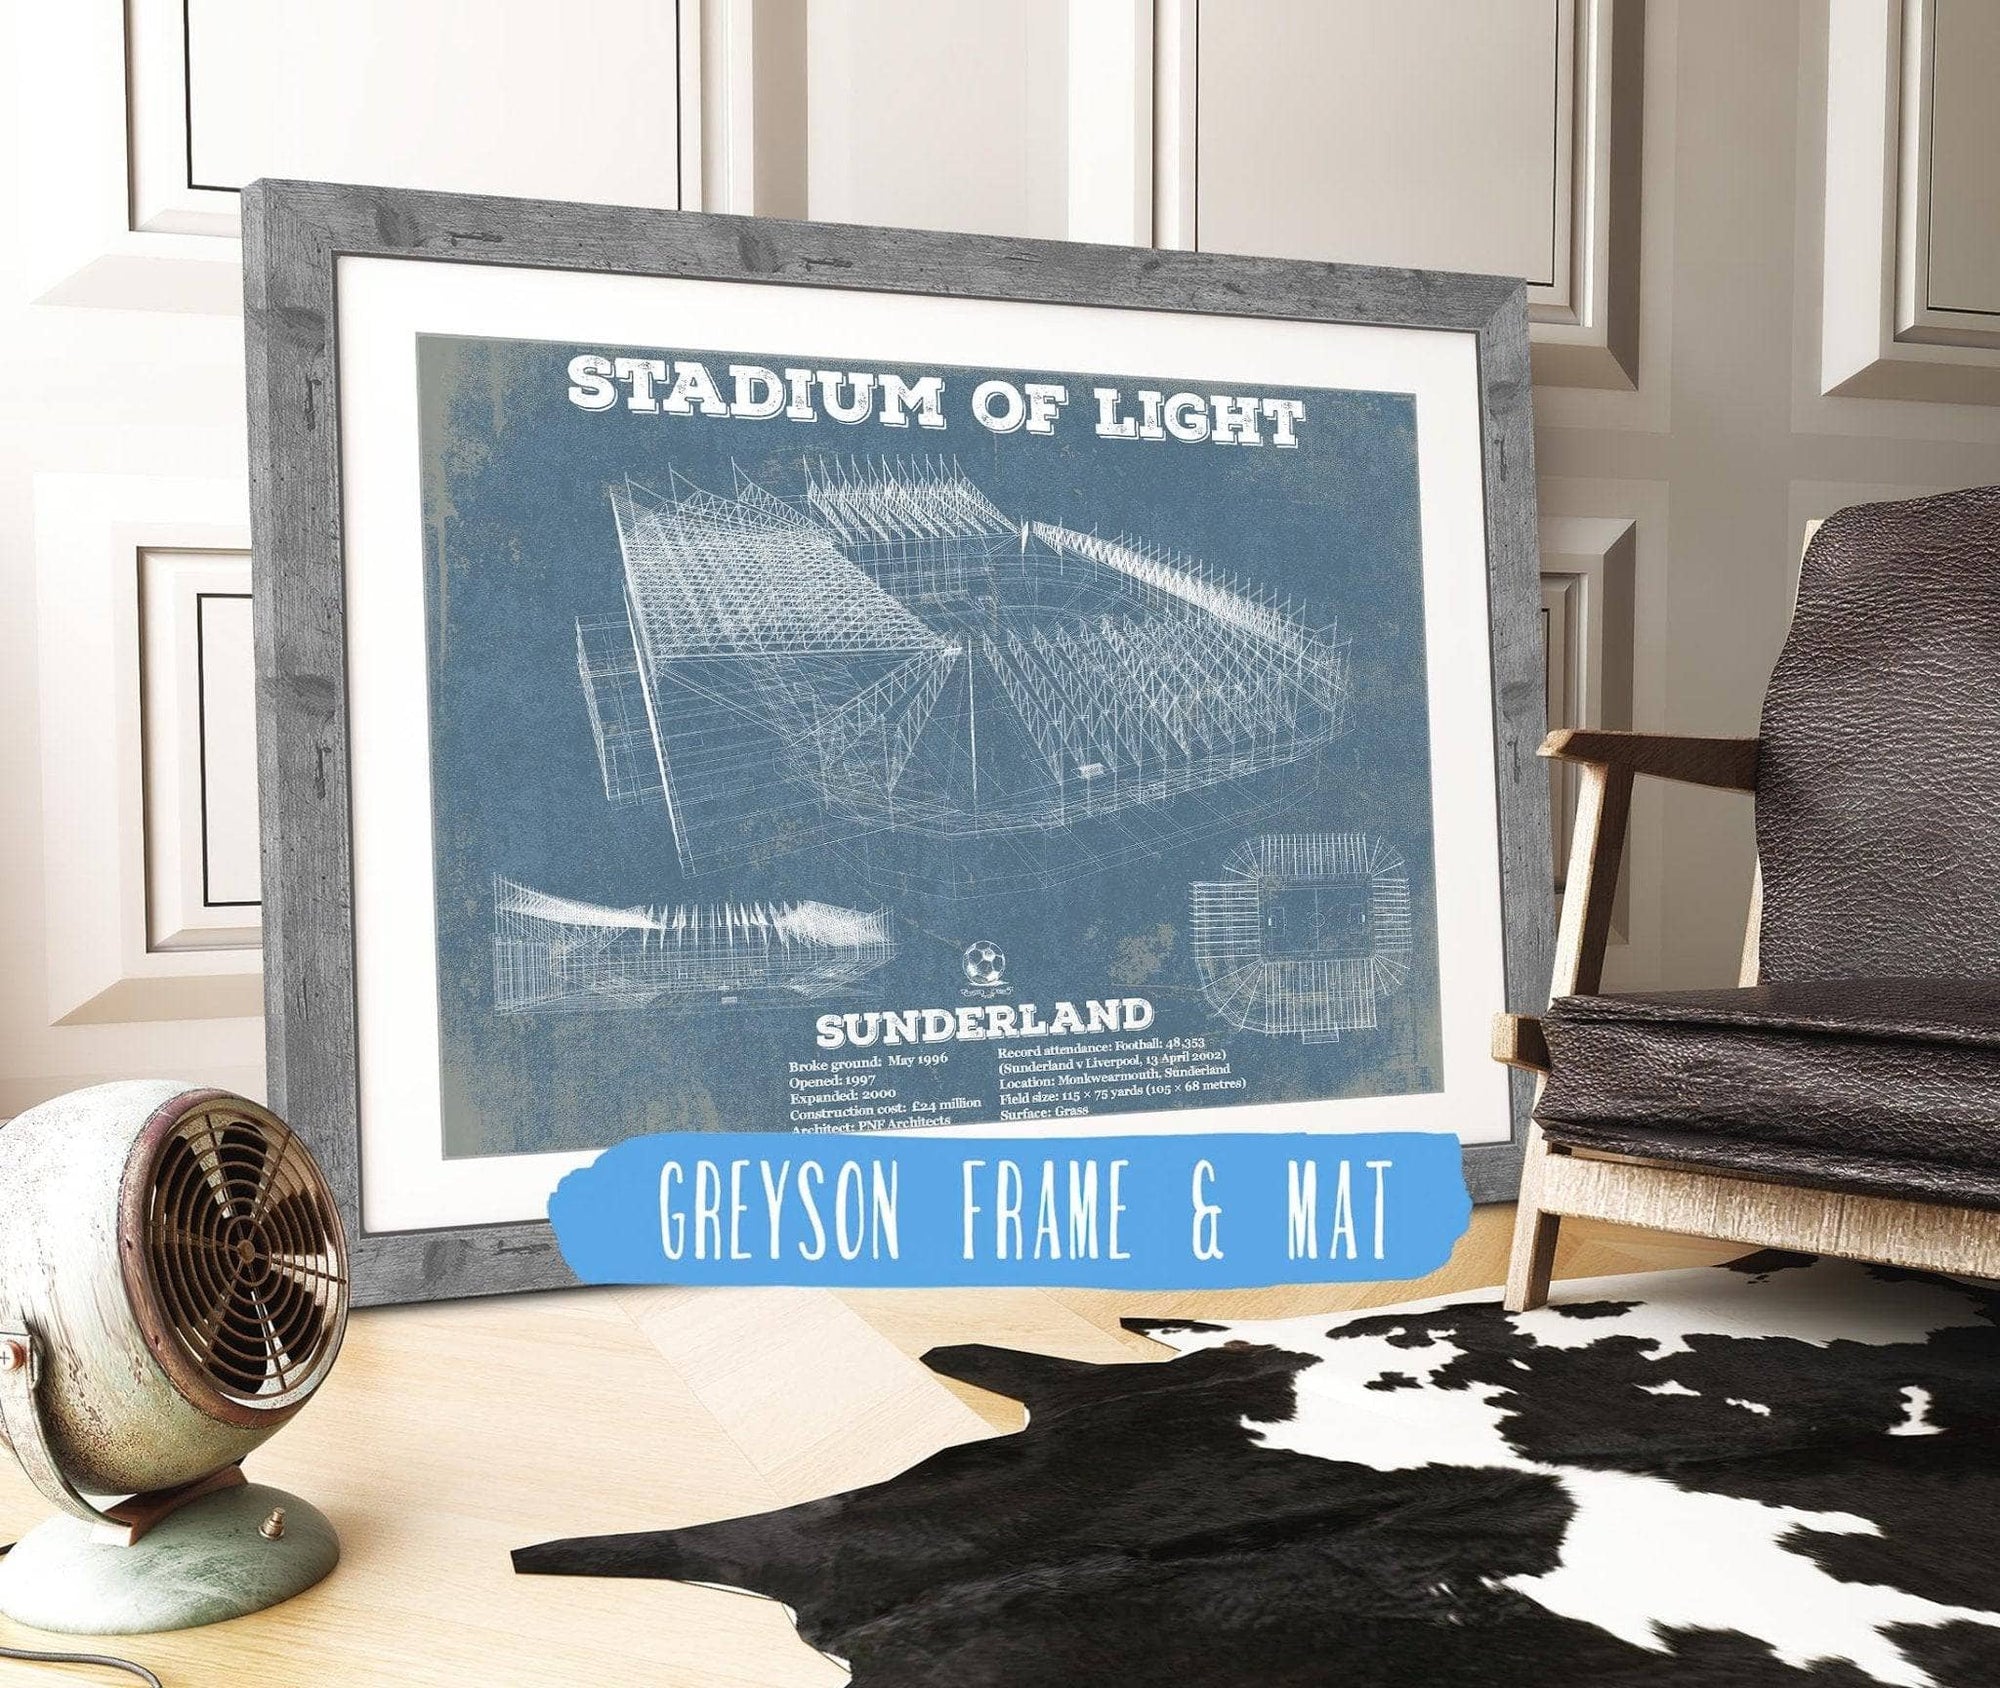 Cutler West Soccer Collection 14" x 11" / Greyson Frame & Mat Sunderland AFC Stadium Of Light Soccer Print 845000162_31058